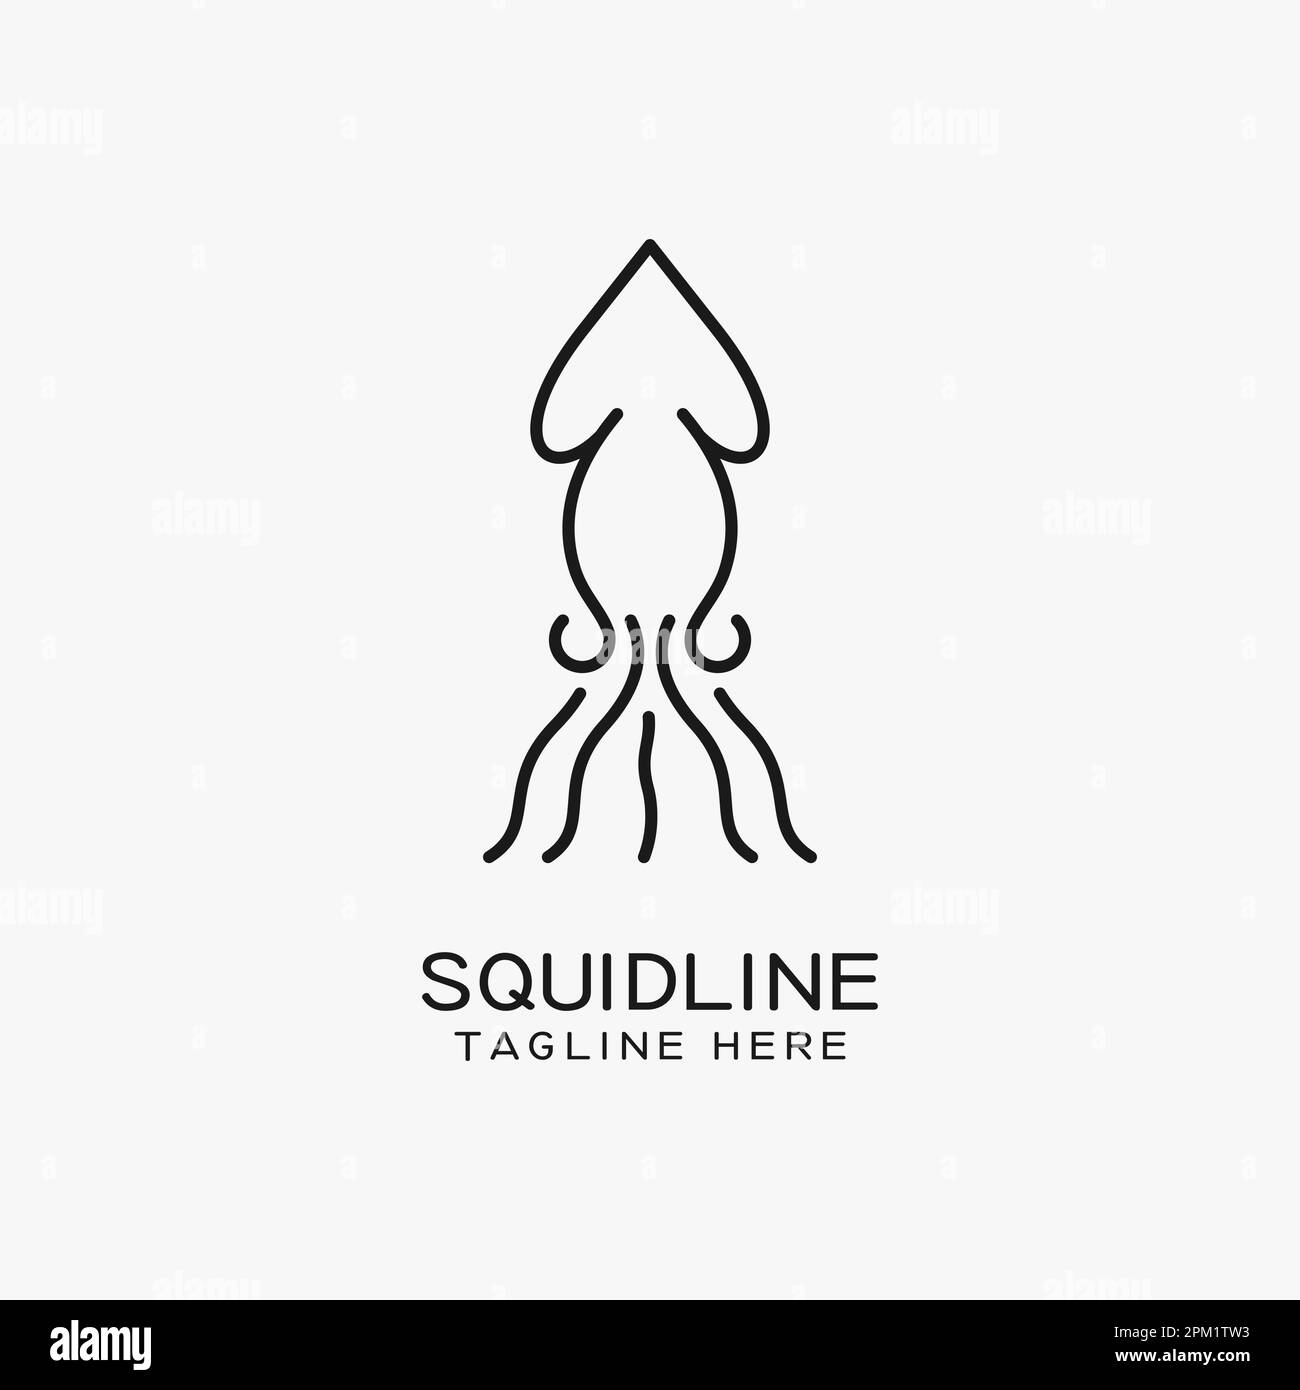 Squid line logo design Stock Vector